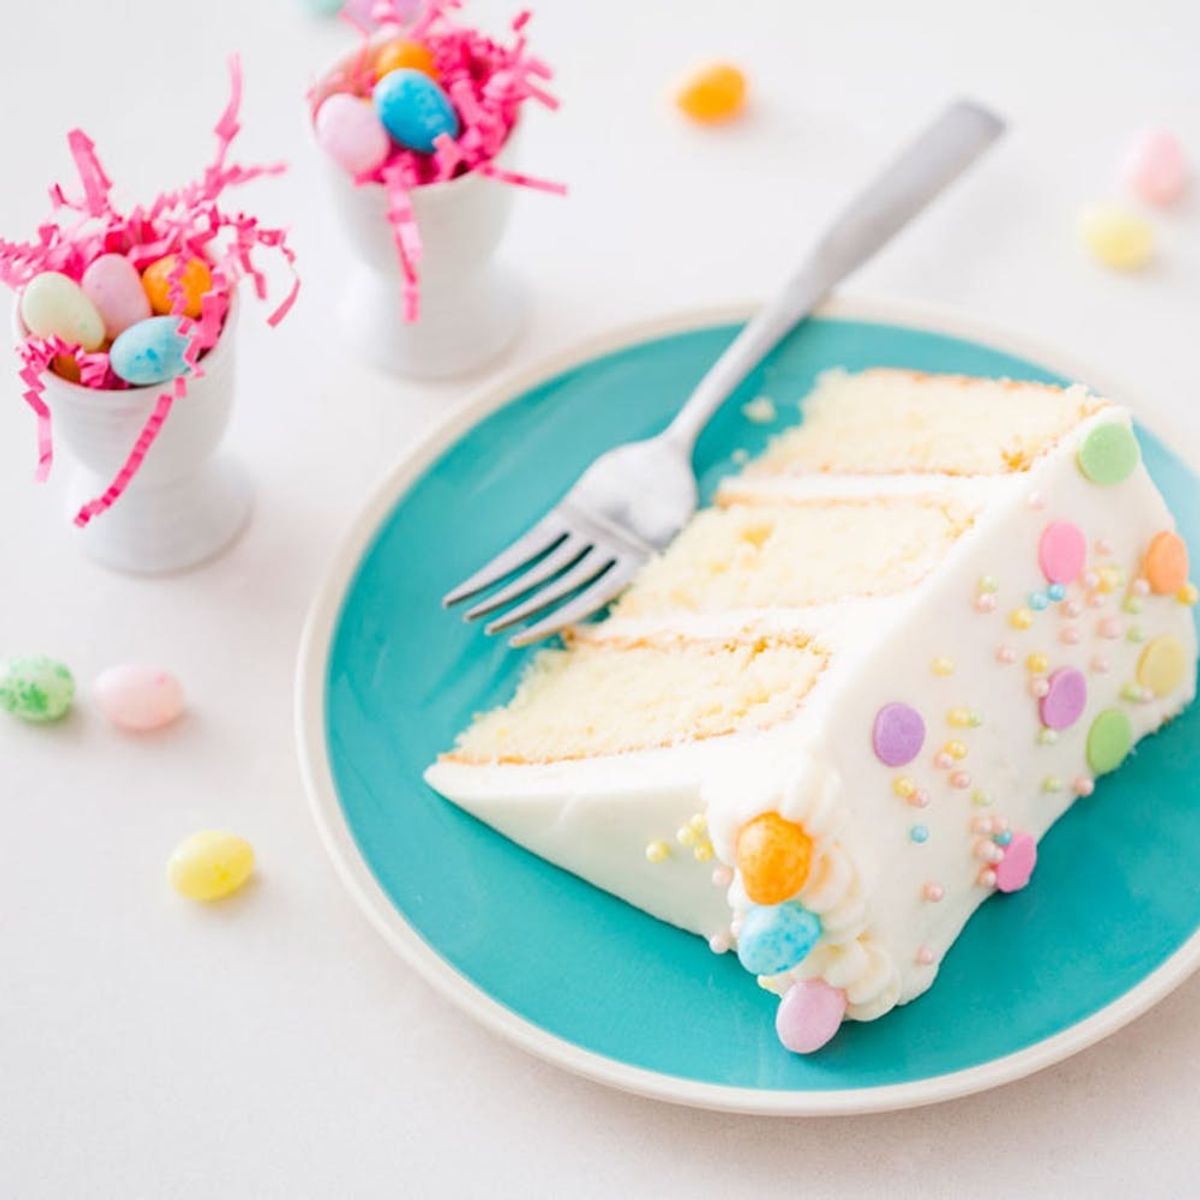 Make This Gorgeous Lemon Cake Recipe for Your Next Spring Gathering